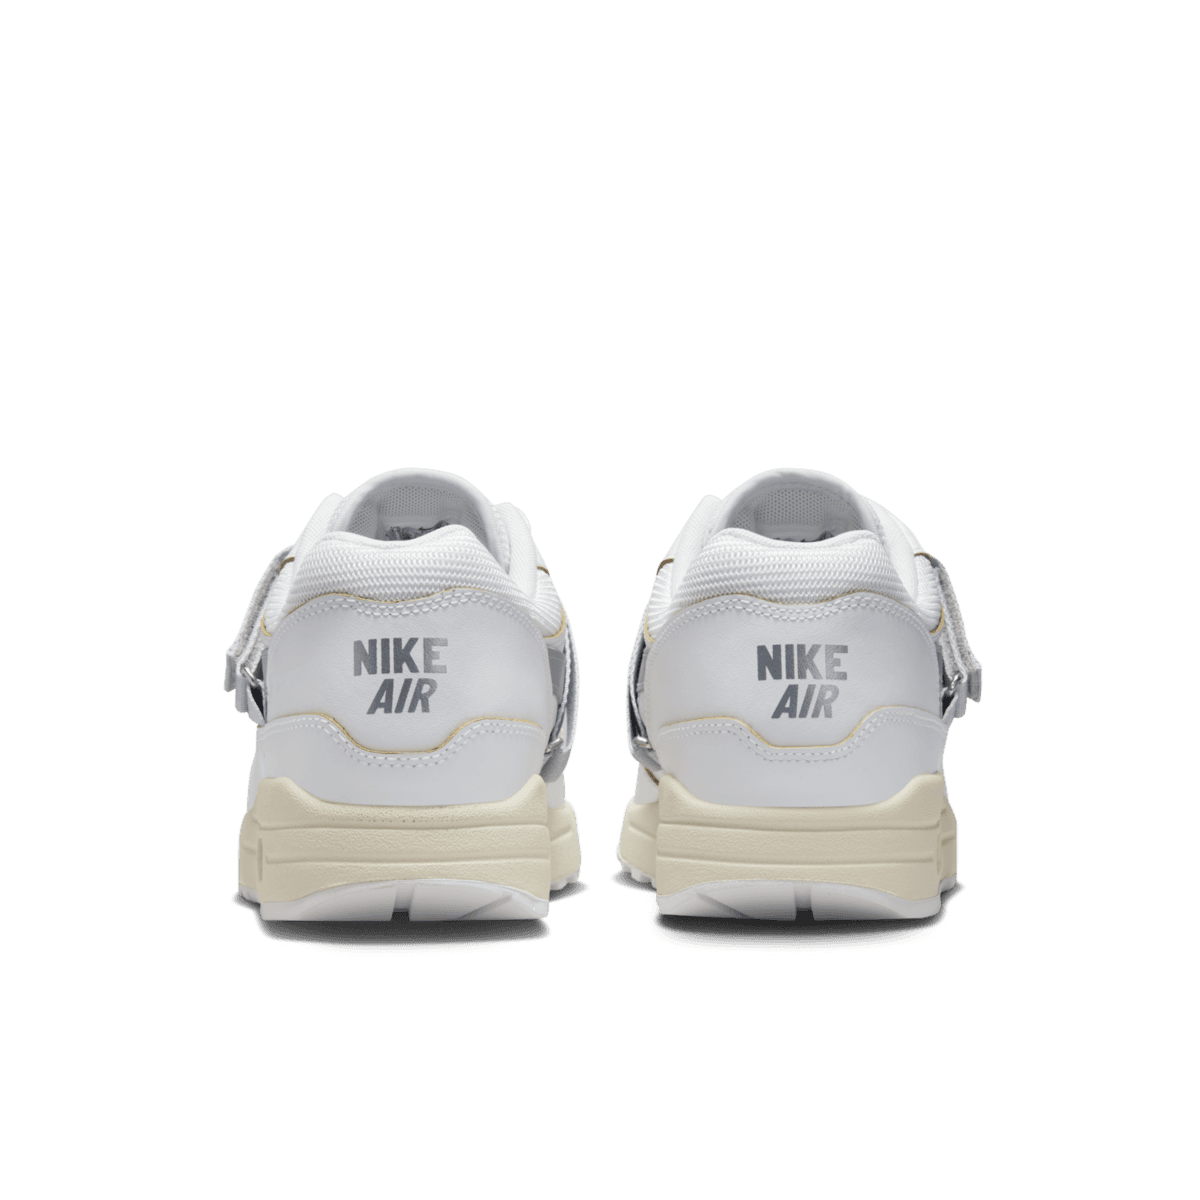 Nike Air Max "Timeless" hinten